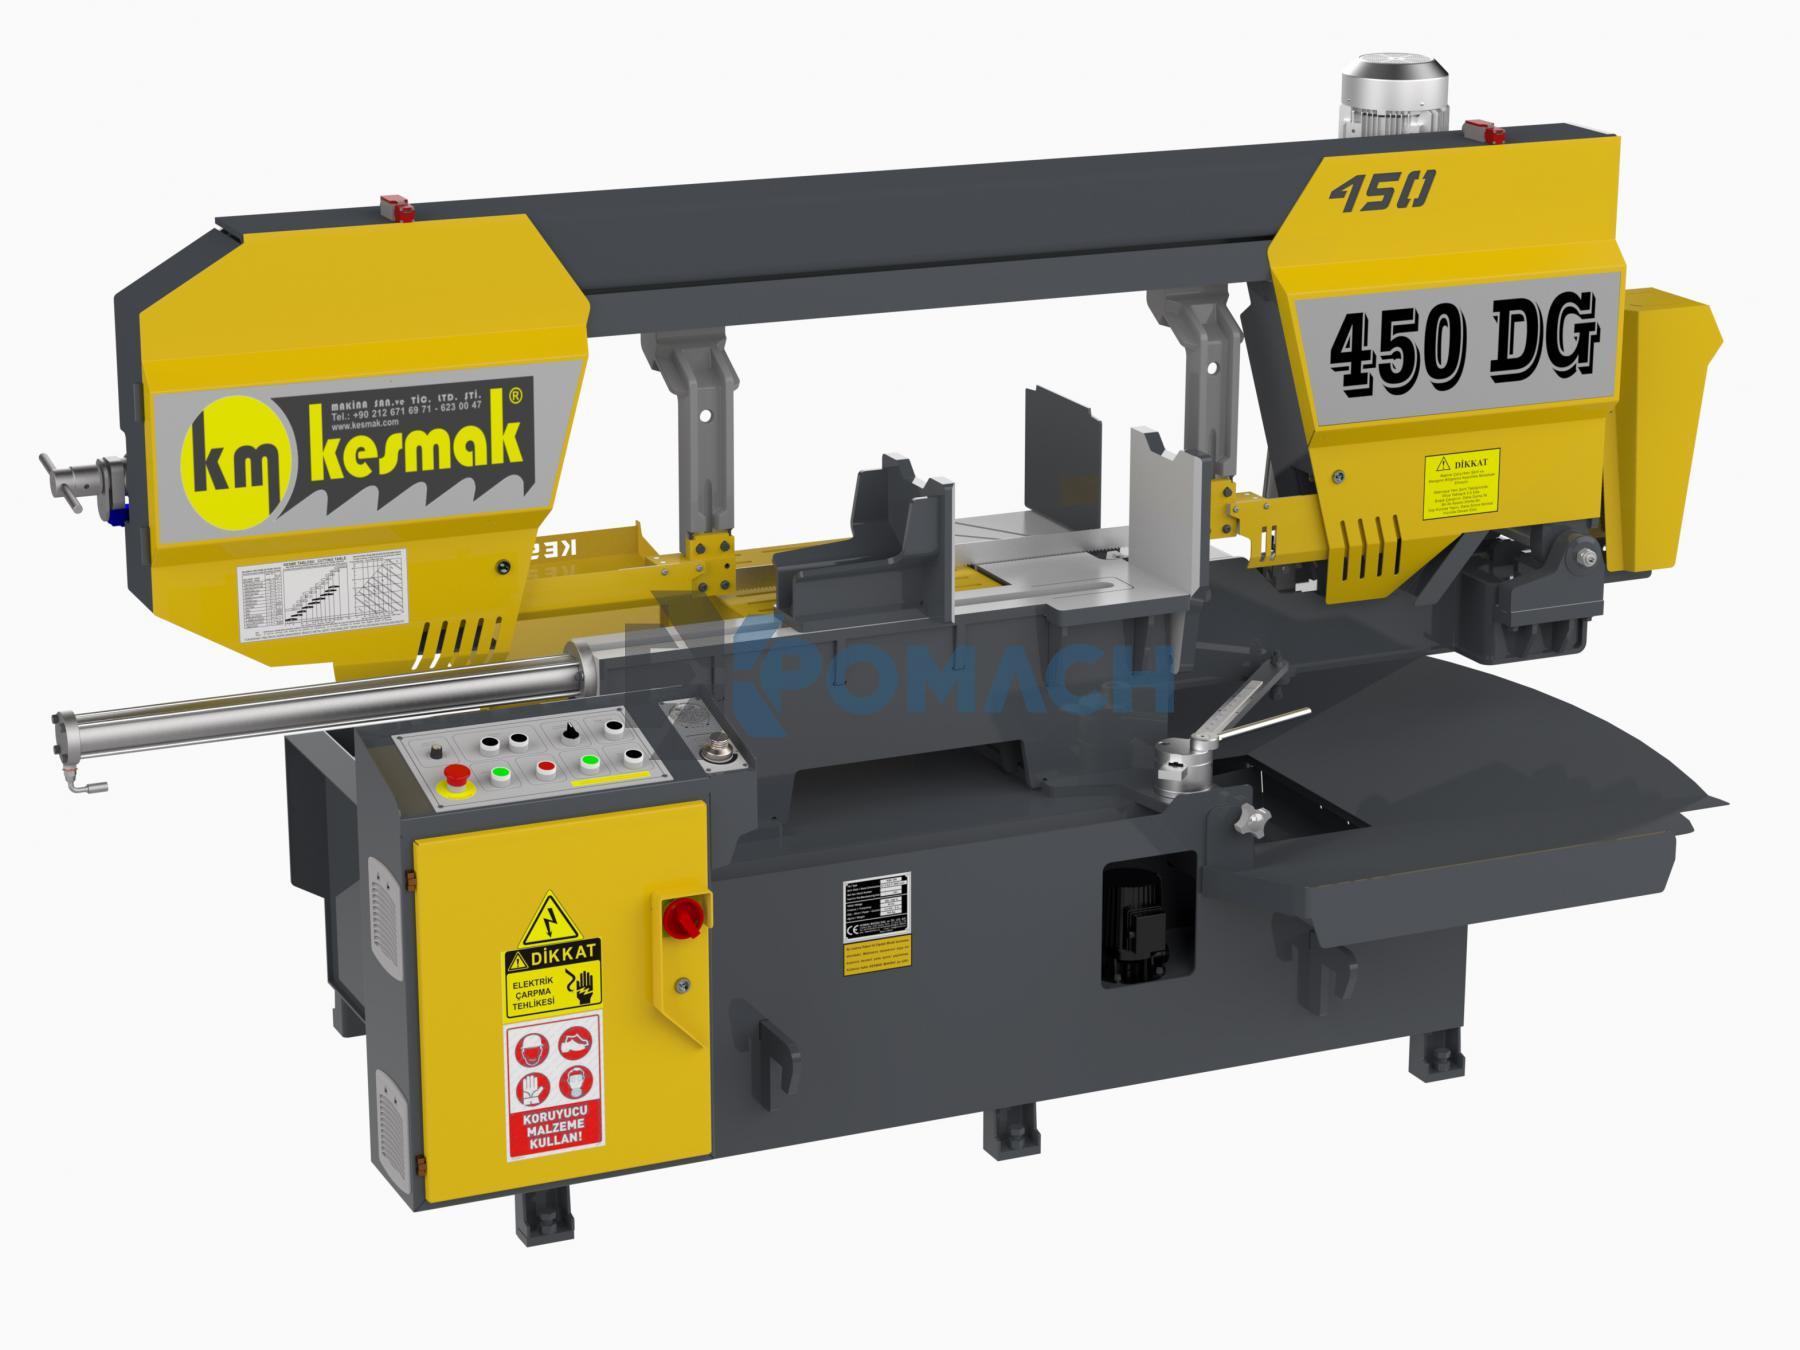 KMY DG 450 Semi-Automatic Angled Bandsaw (Kesmak brand)